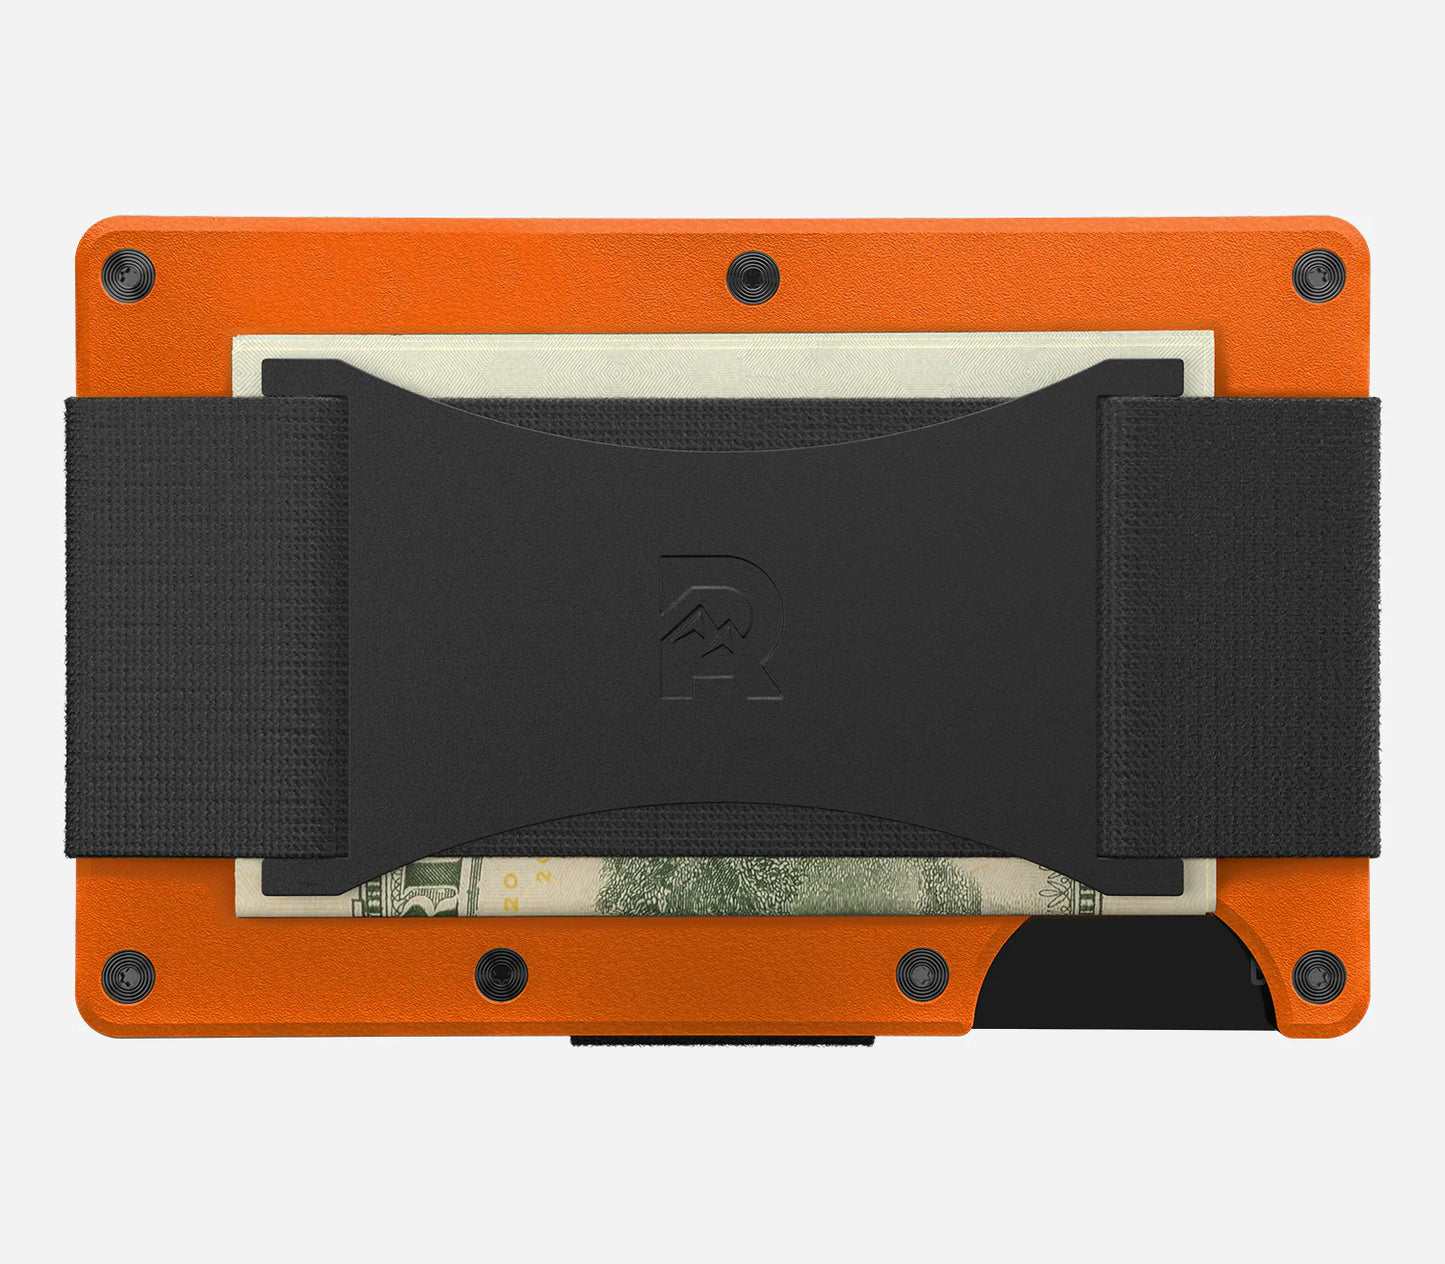 Ridge Wallet Cash Strap | Basecamp Orange